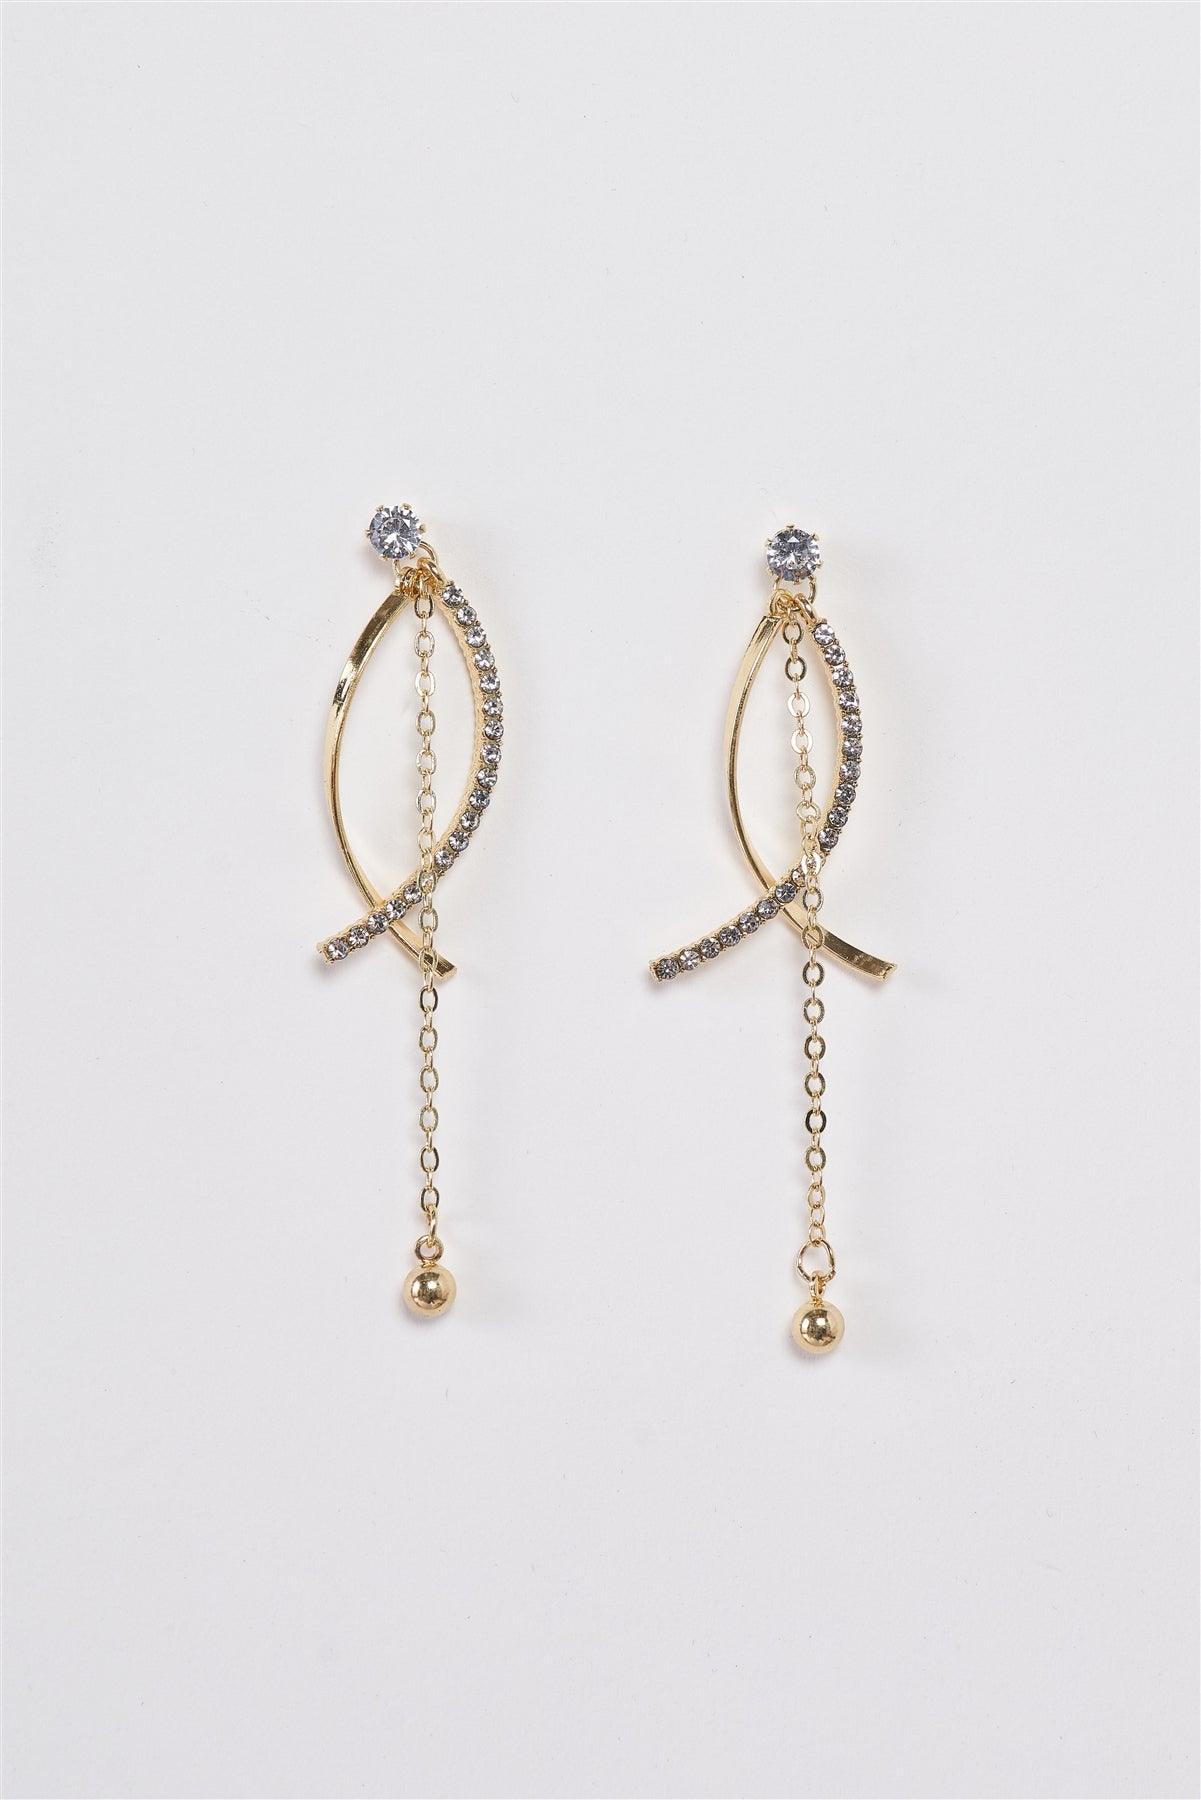 Gold & Rhinestone Long Dangle Spiral Drop Earrings /3 Pairs